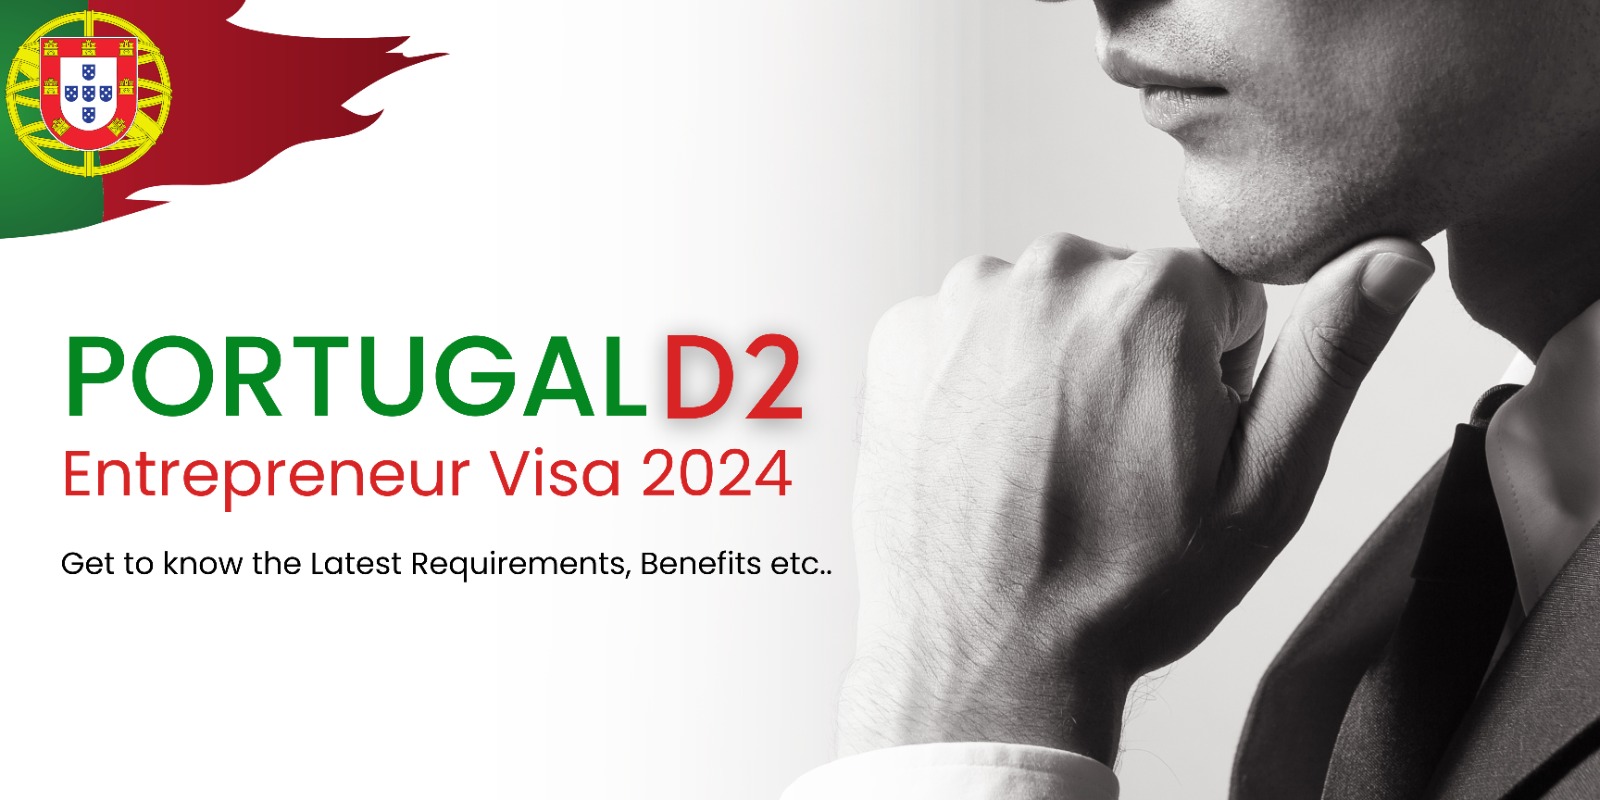 Portugal D2 Entrepreneur Visa 2024Latest Requirements, Benefits Fast